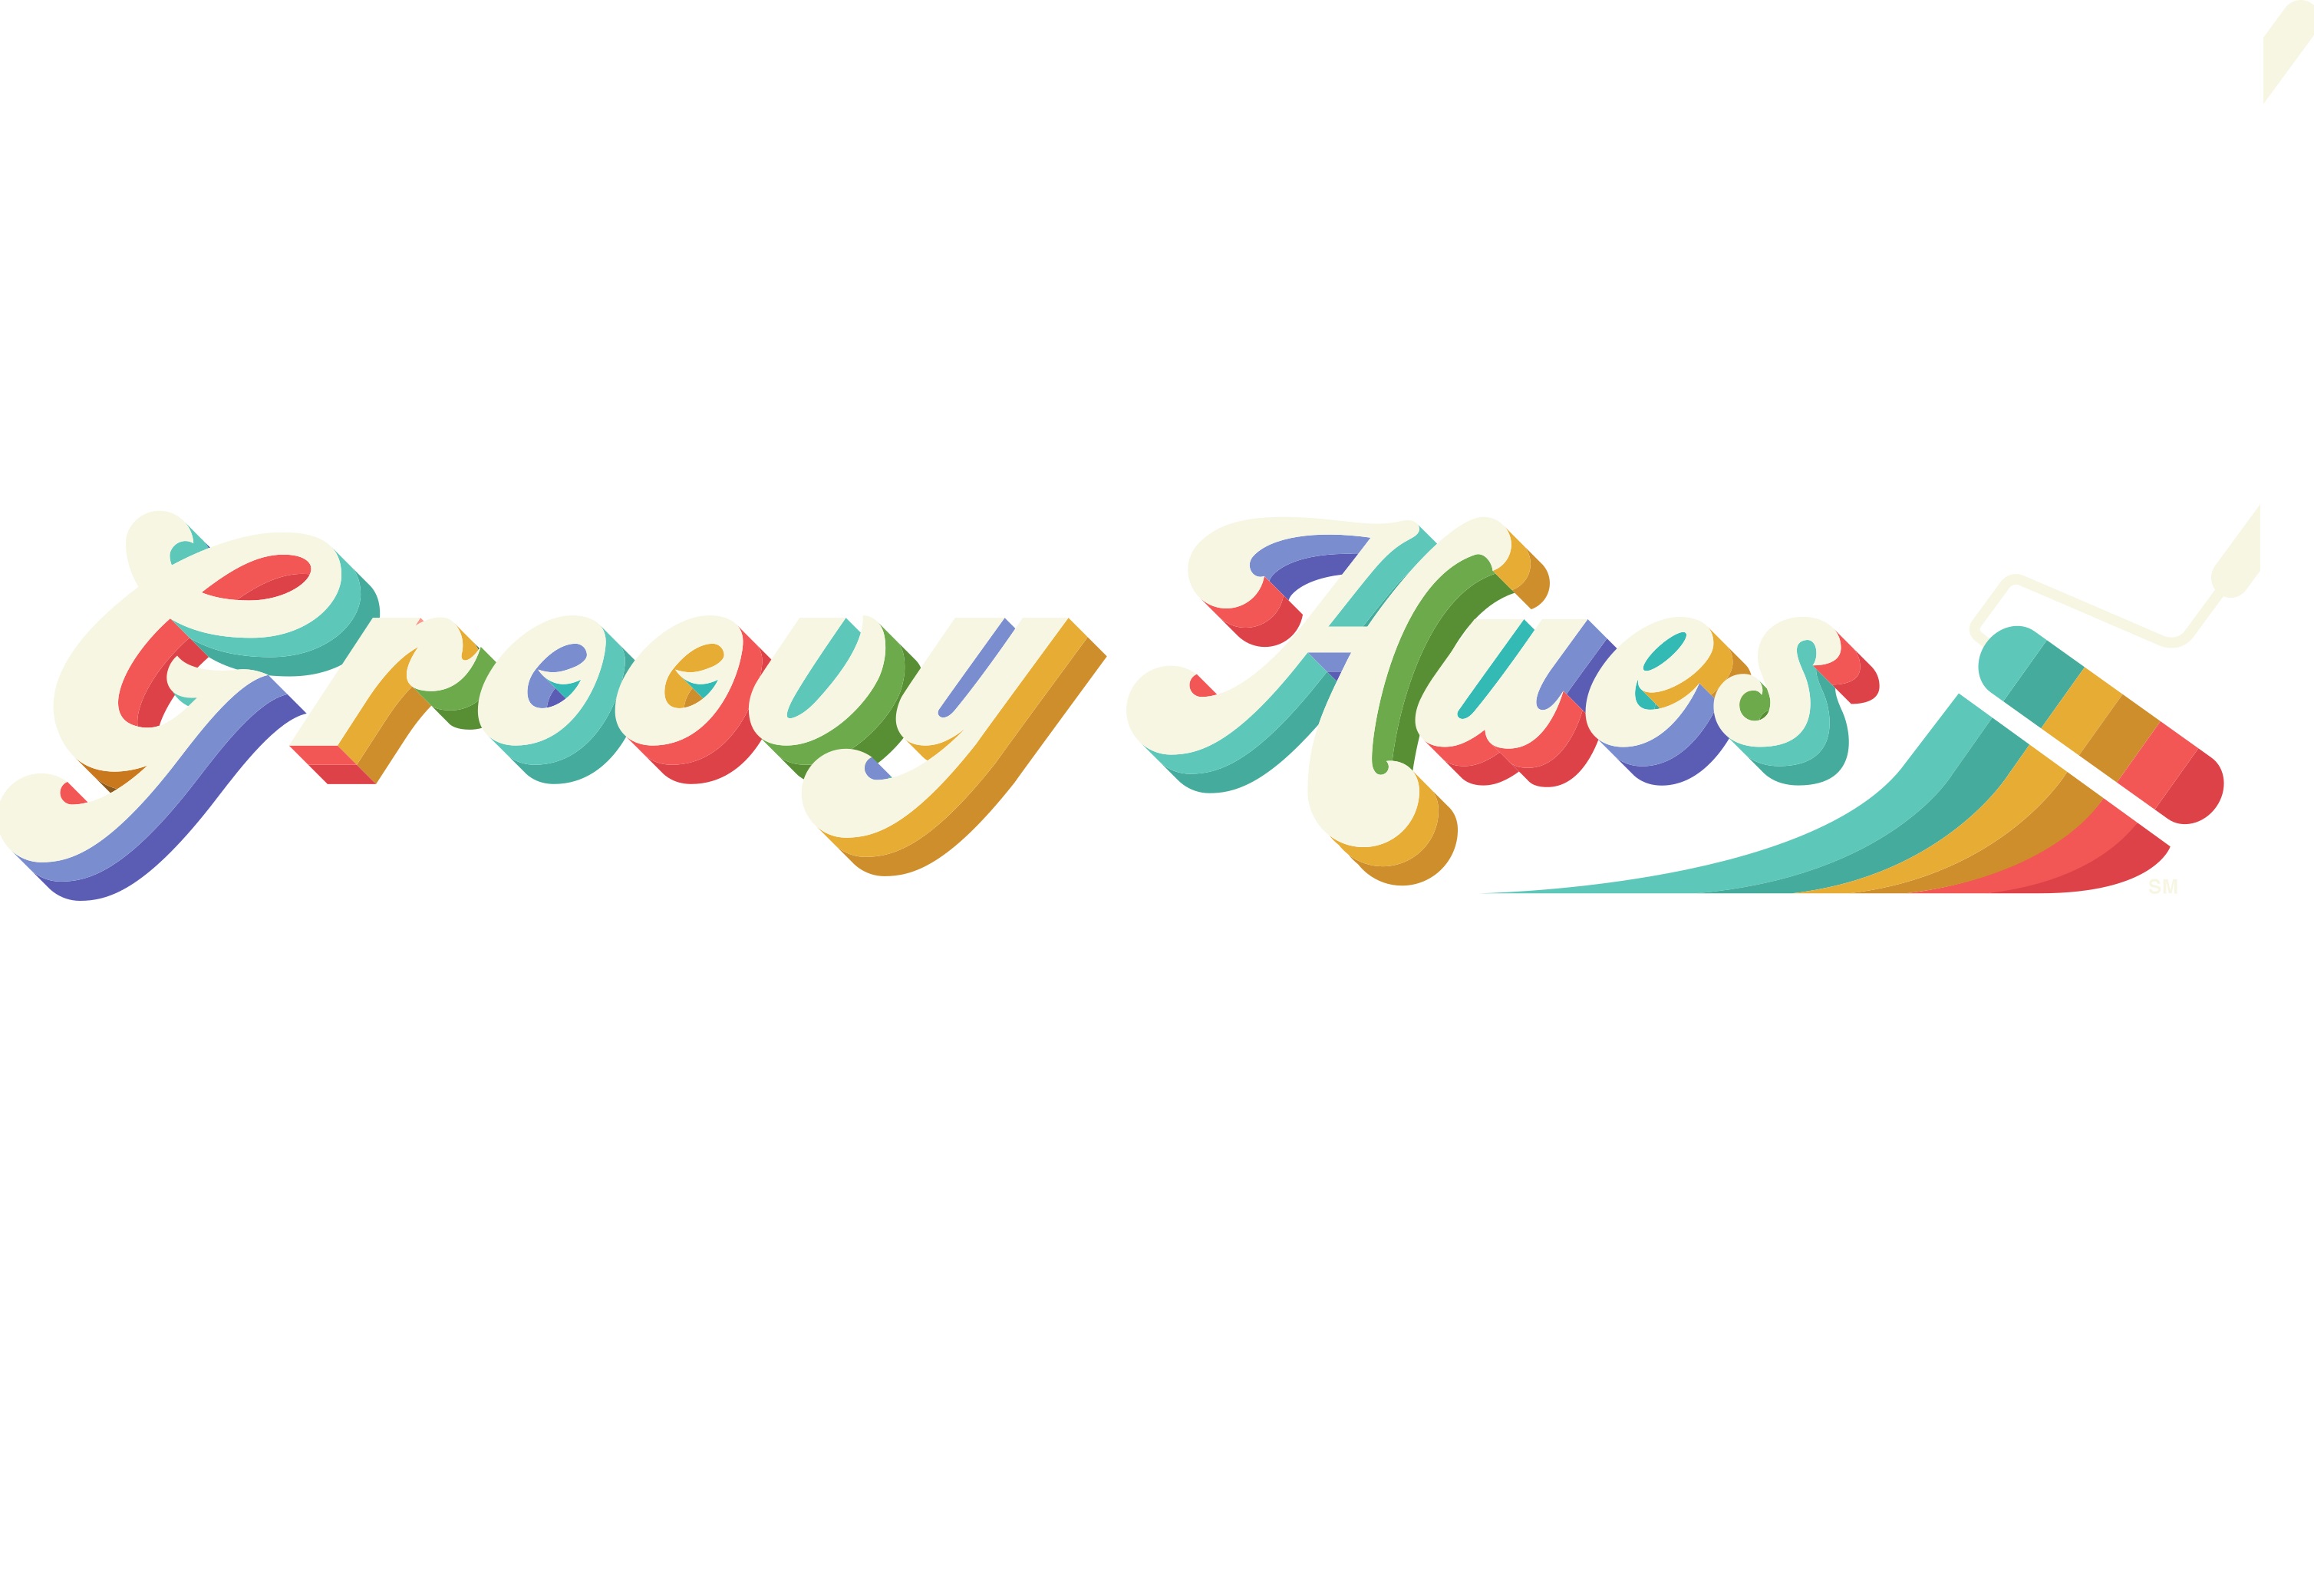 Groovy-logo2-1.jpg